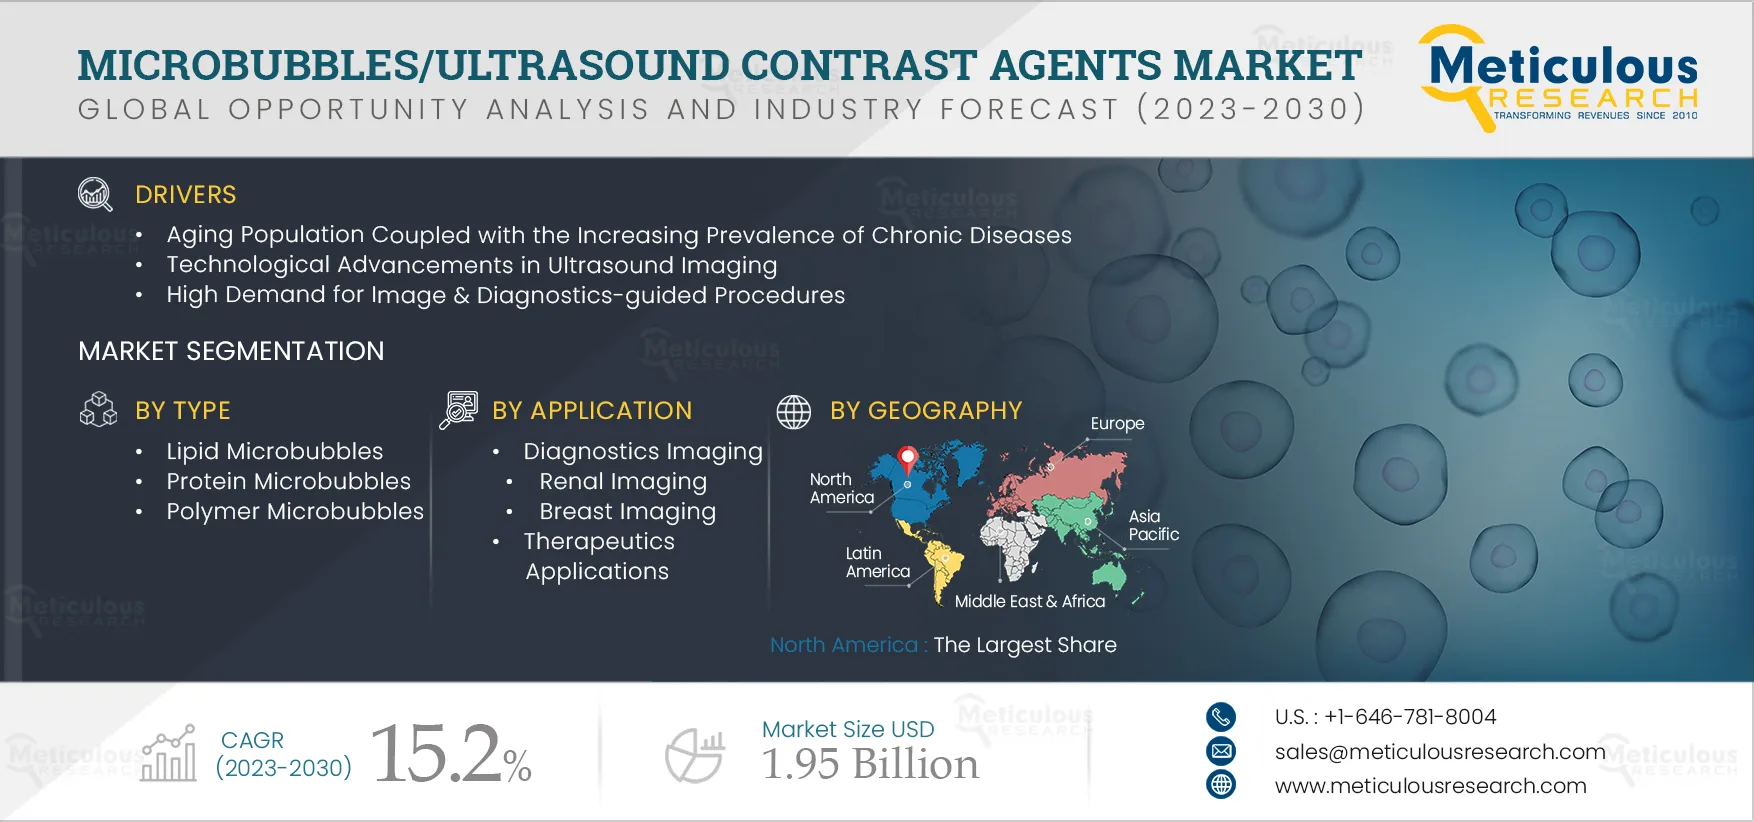 Microbubbles/Ultrasound Contrast Agents Market